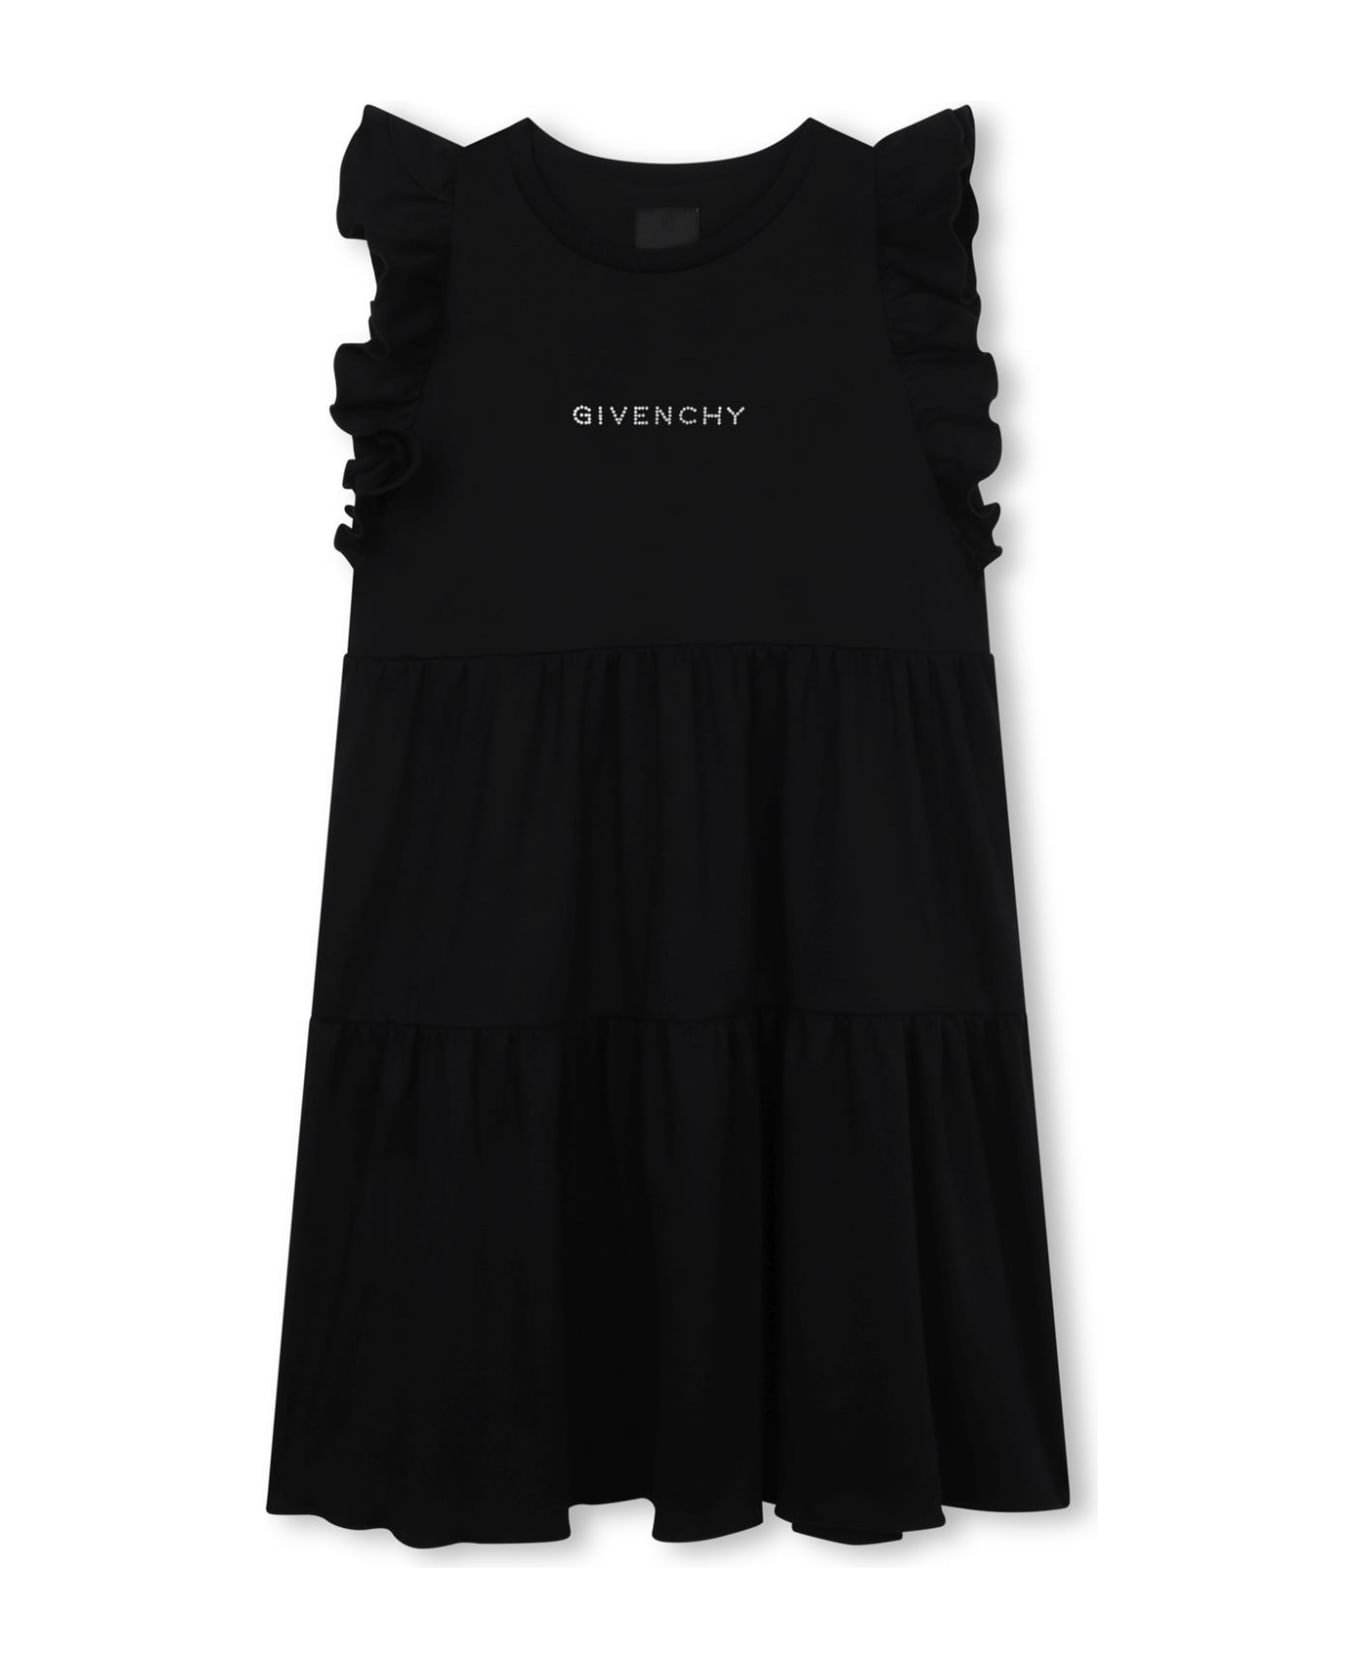 Givenchy Dress With Rhinestones - Black